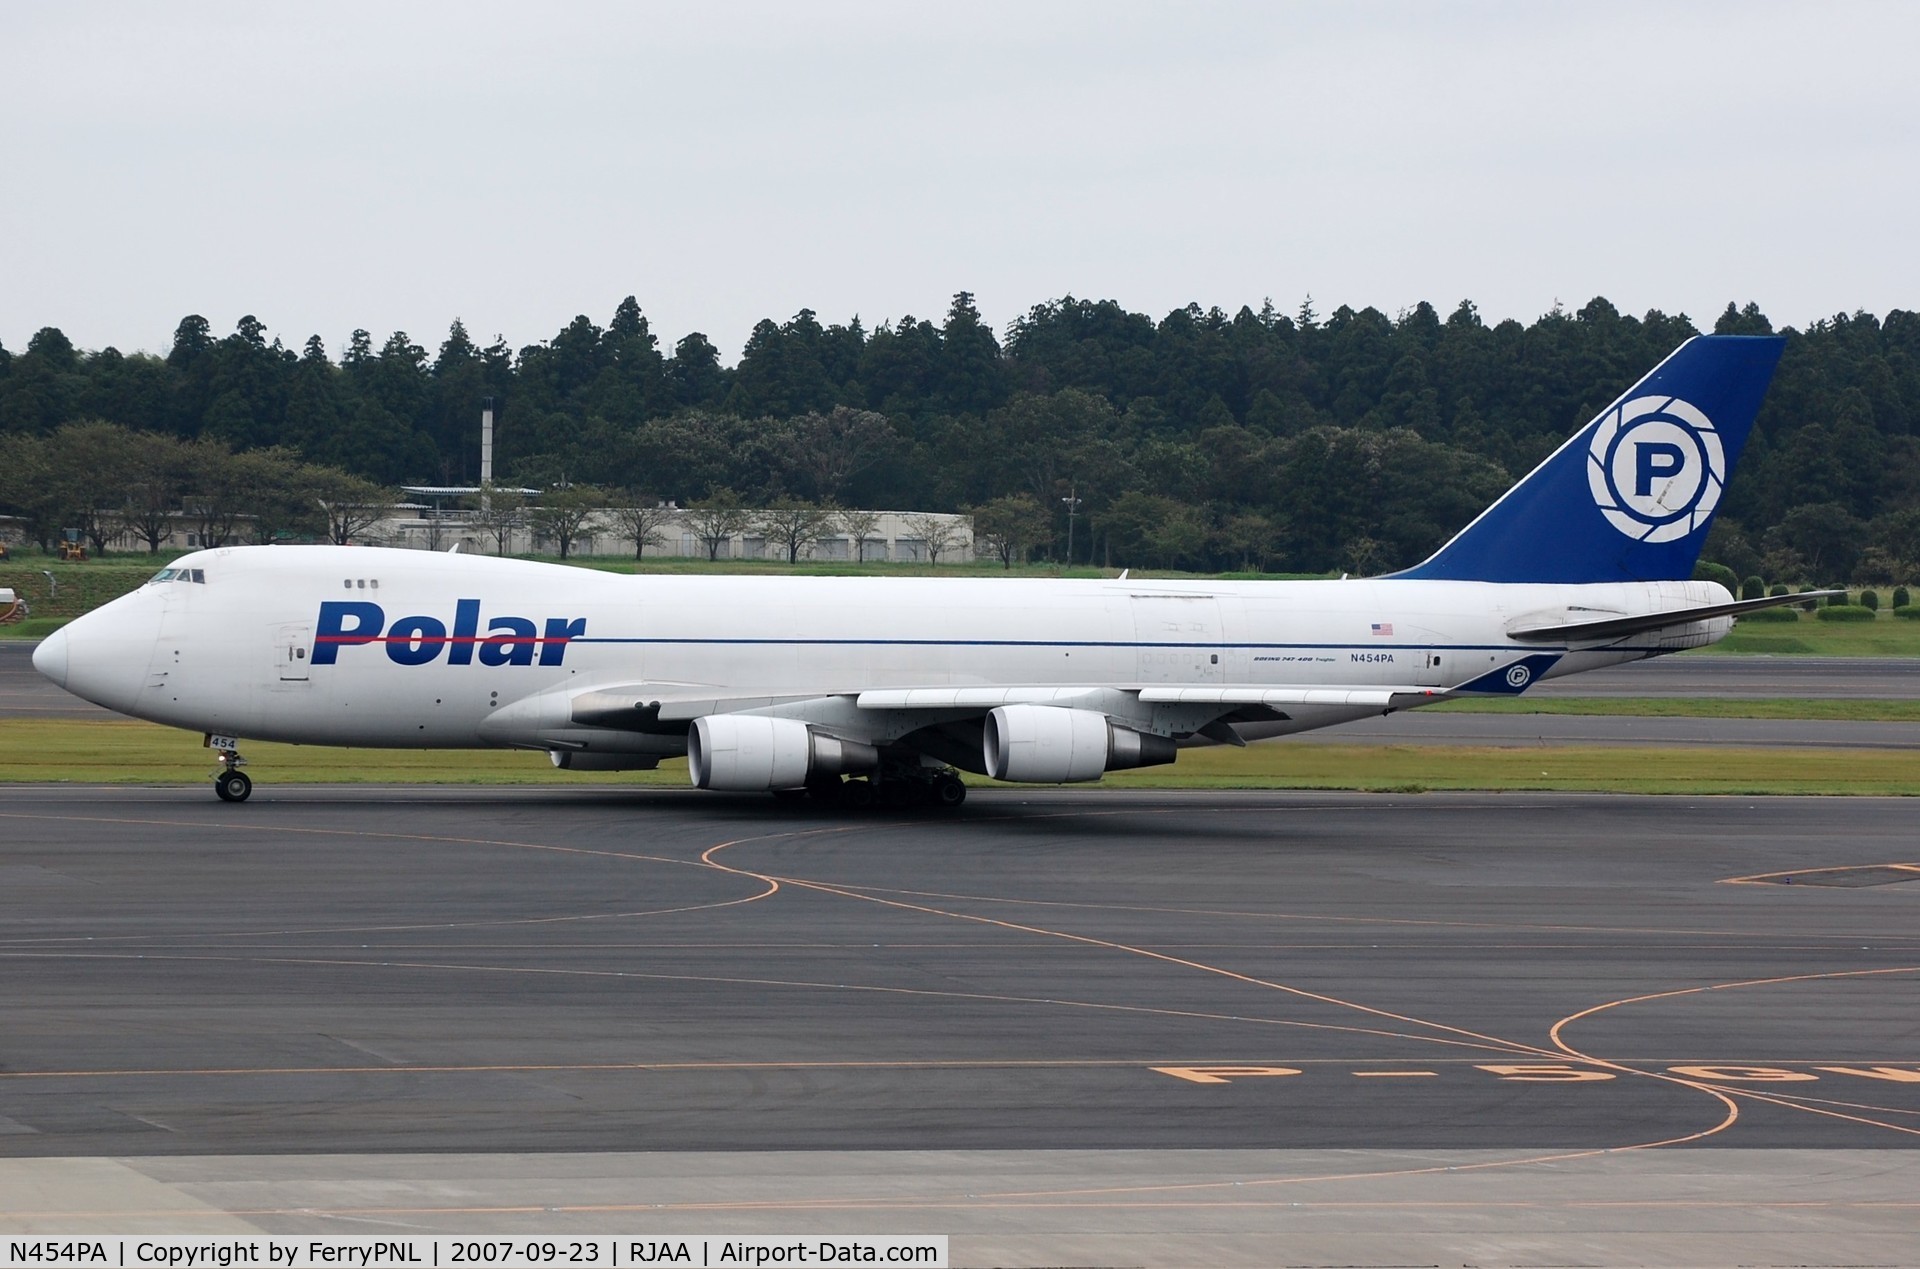 N454PA, 2002 Boeing 747-46NF C/N 30812, Polar B744F for departure.